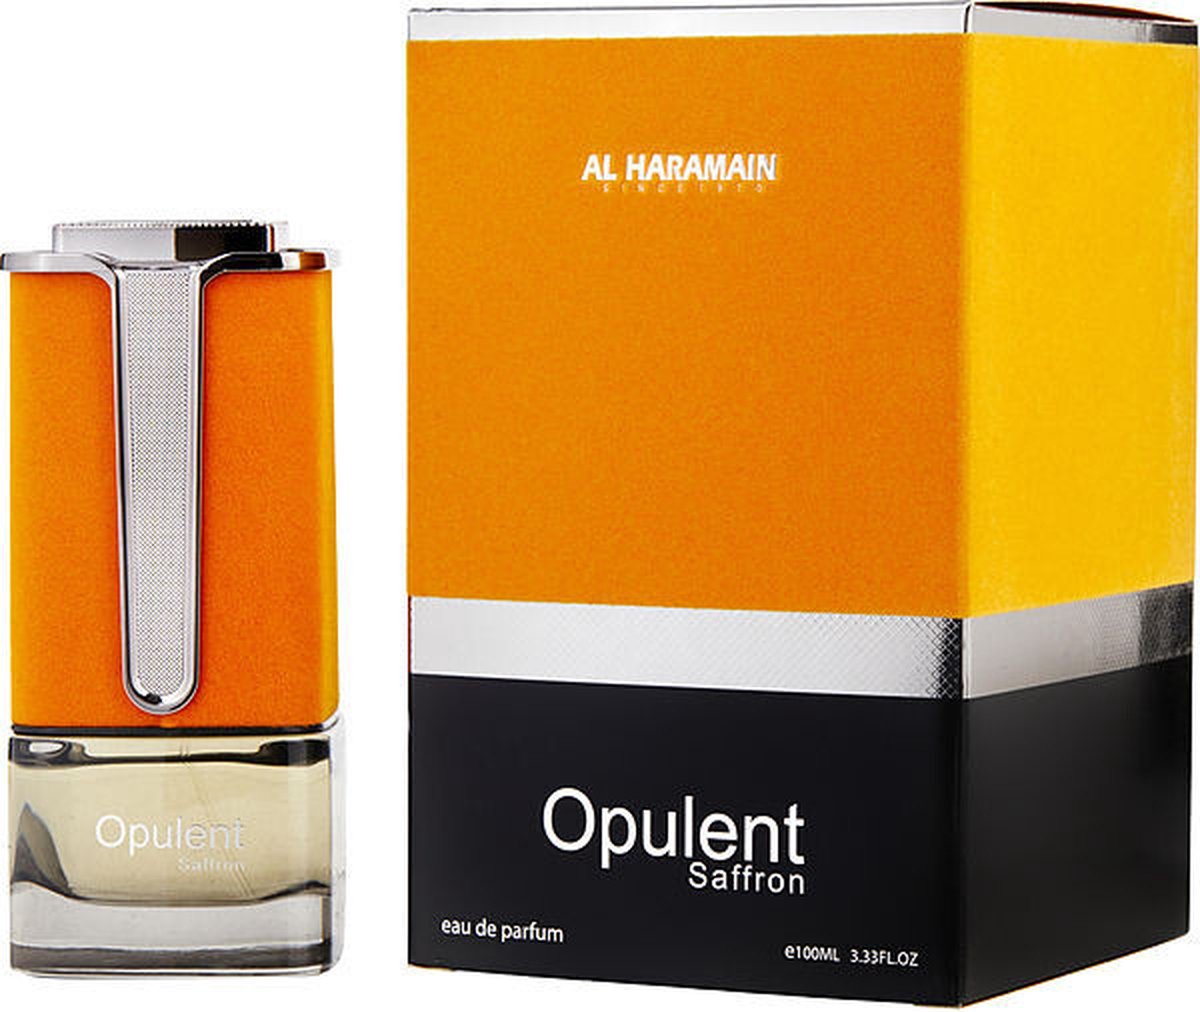 Al Haramain Opulent Saffron - Eau de parfum spray - 100 ml